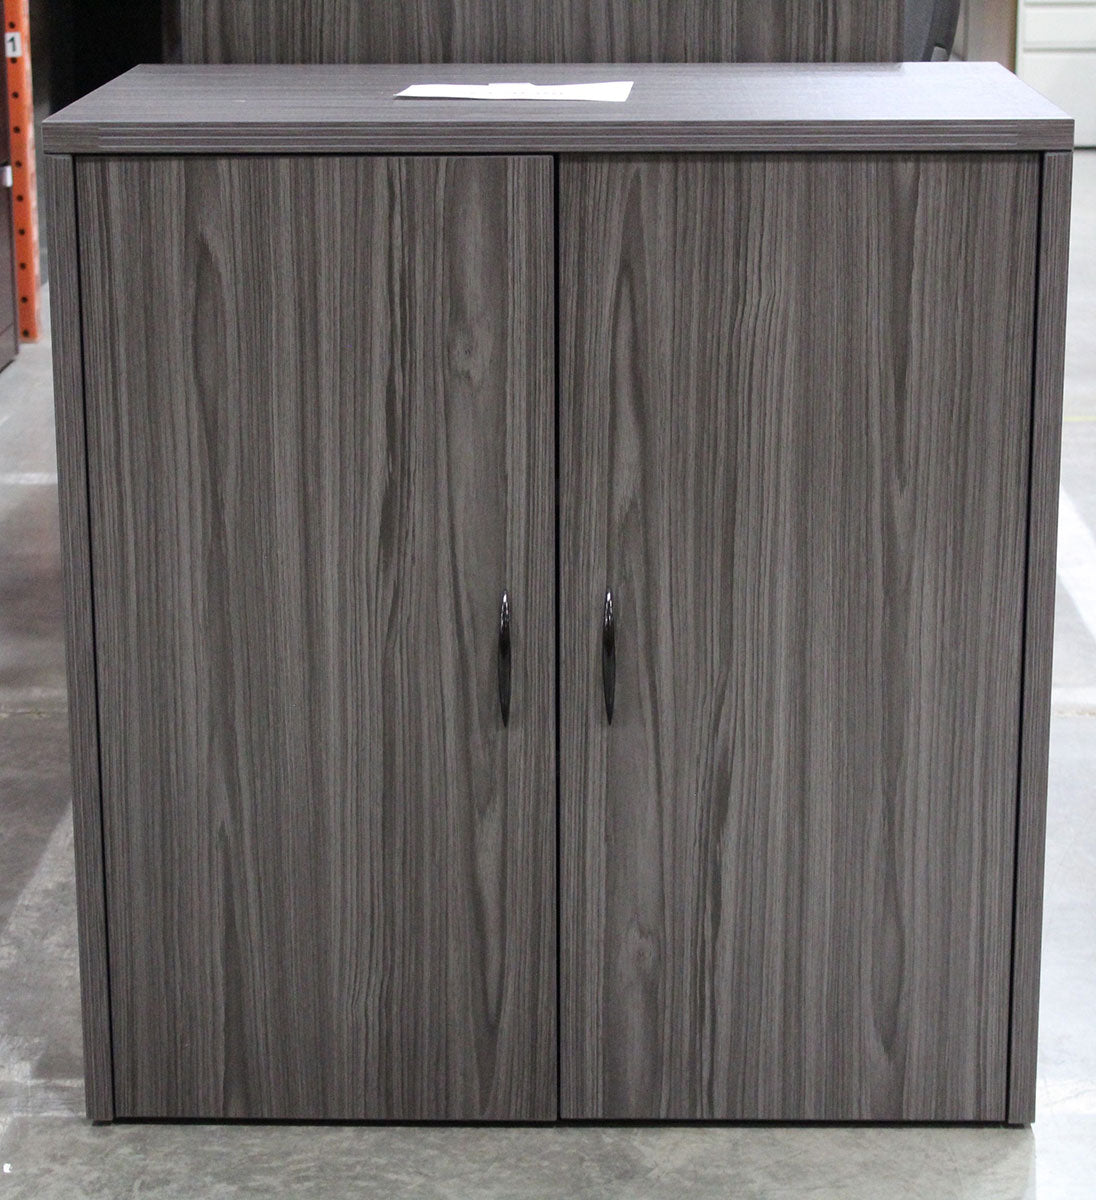 NAP-212DW - Napa Storage Cabinet w/ Wood Doors by OSP